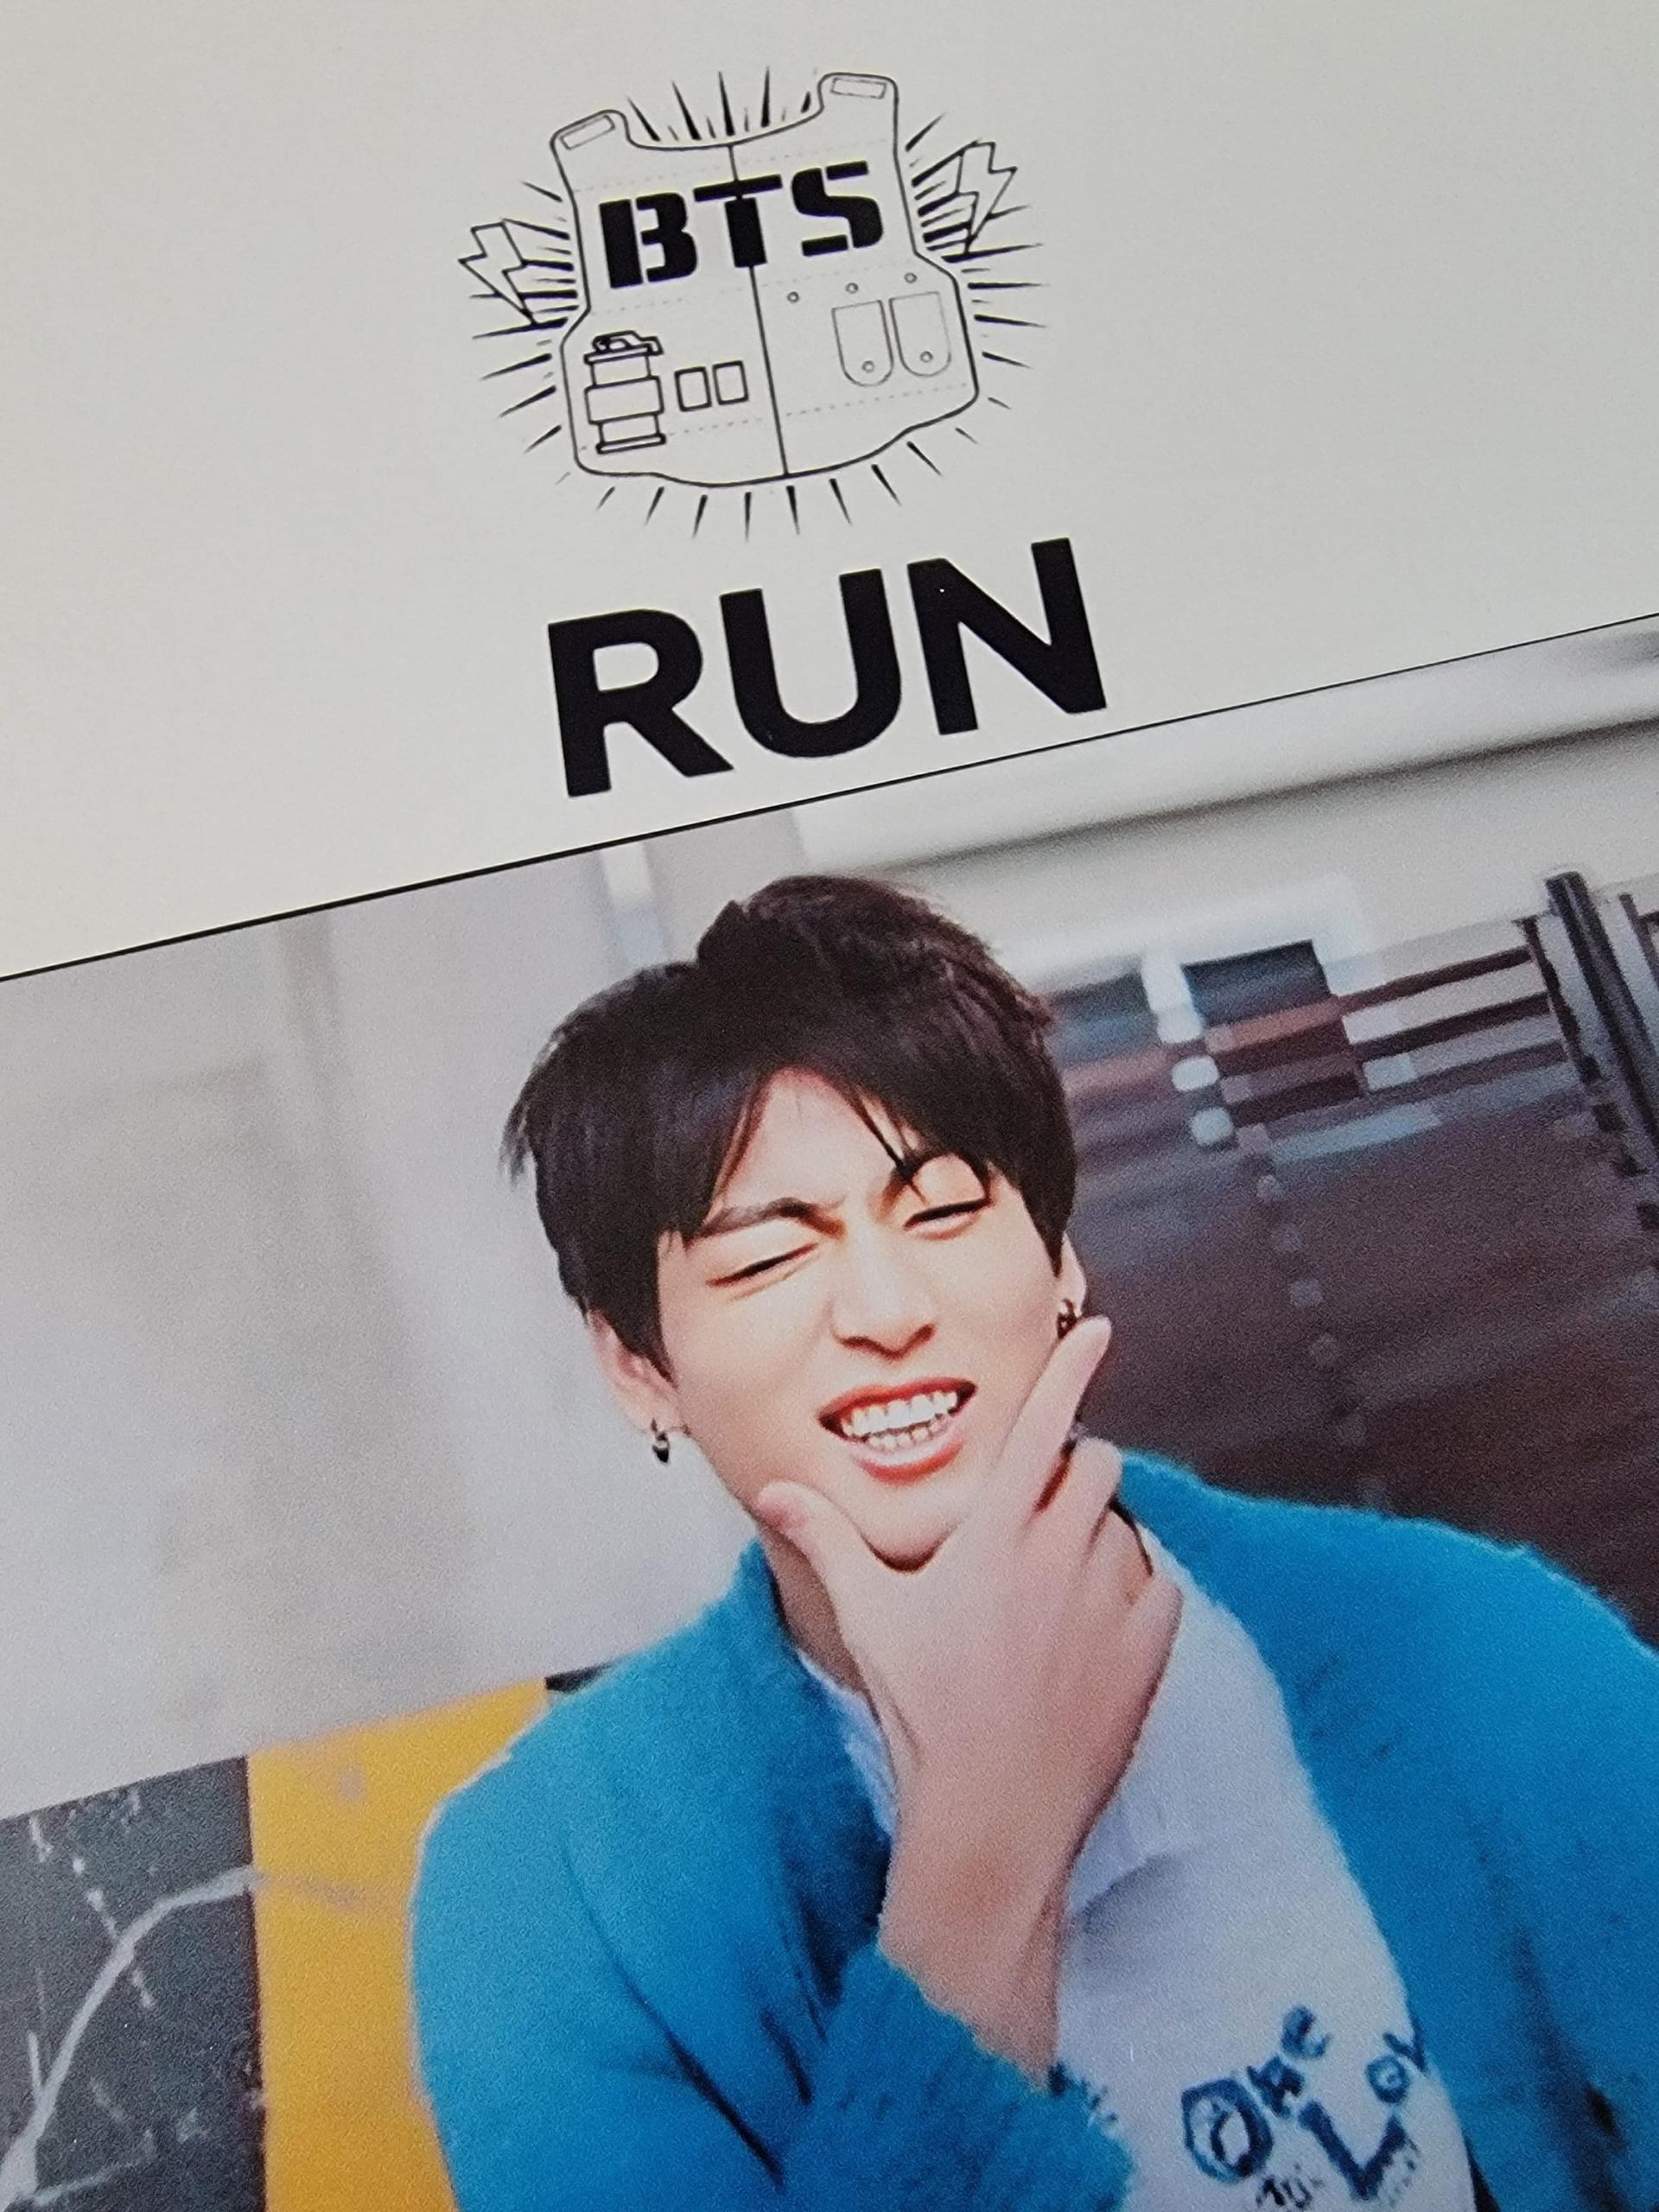 BTS RUN Broadcast Photocards - Ultra Rare!